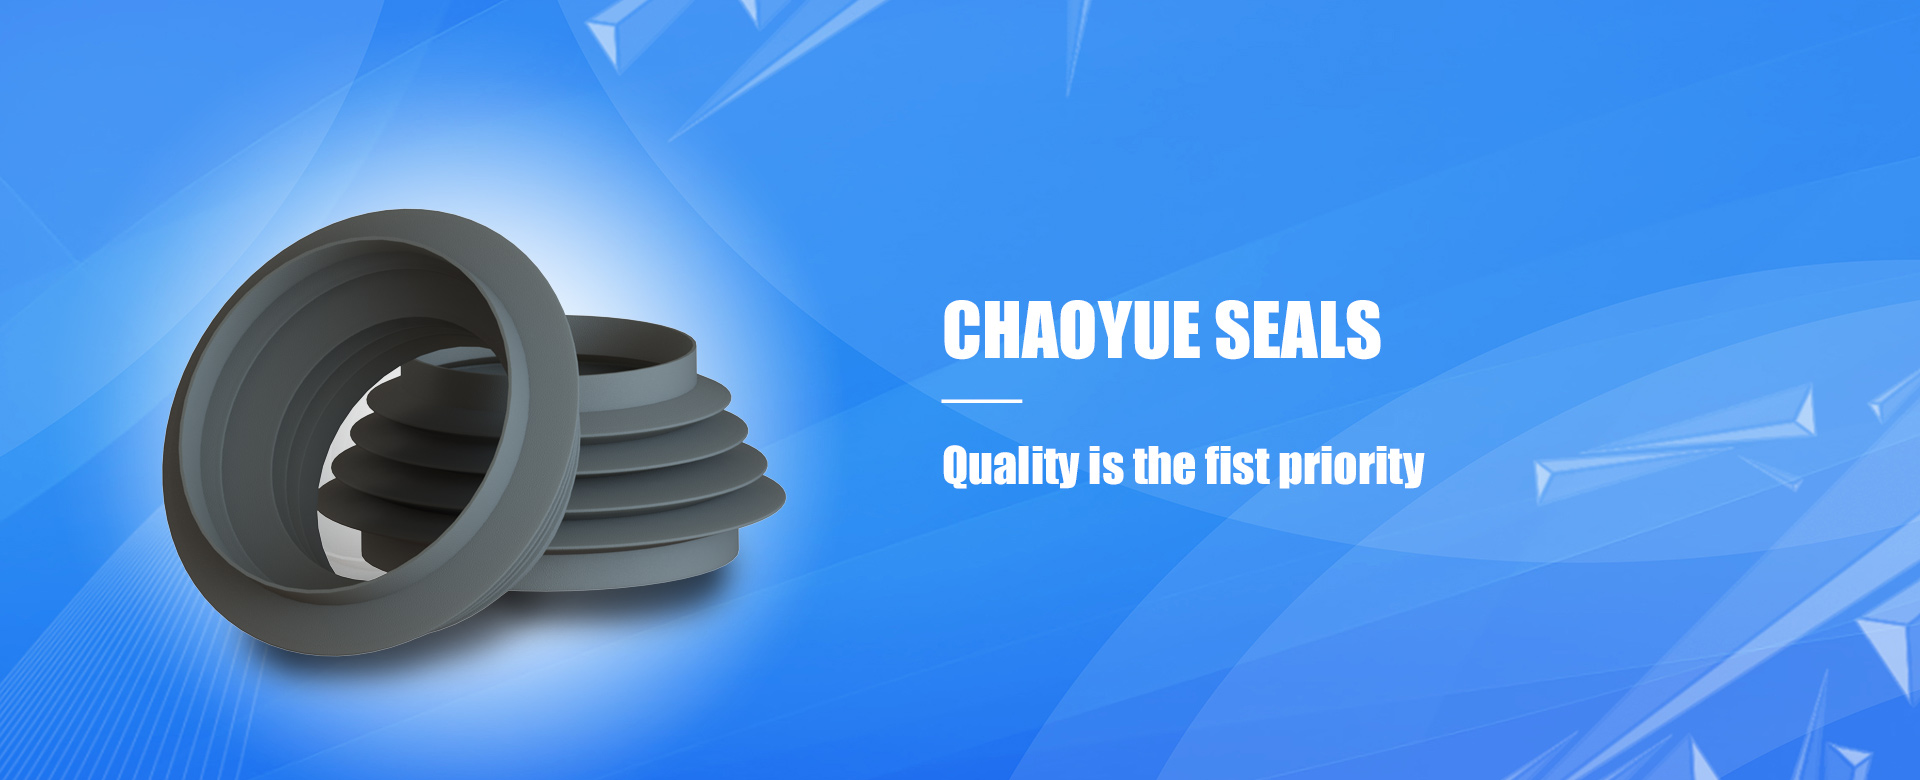 chaoyue seals